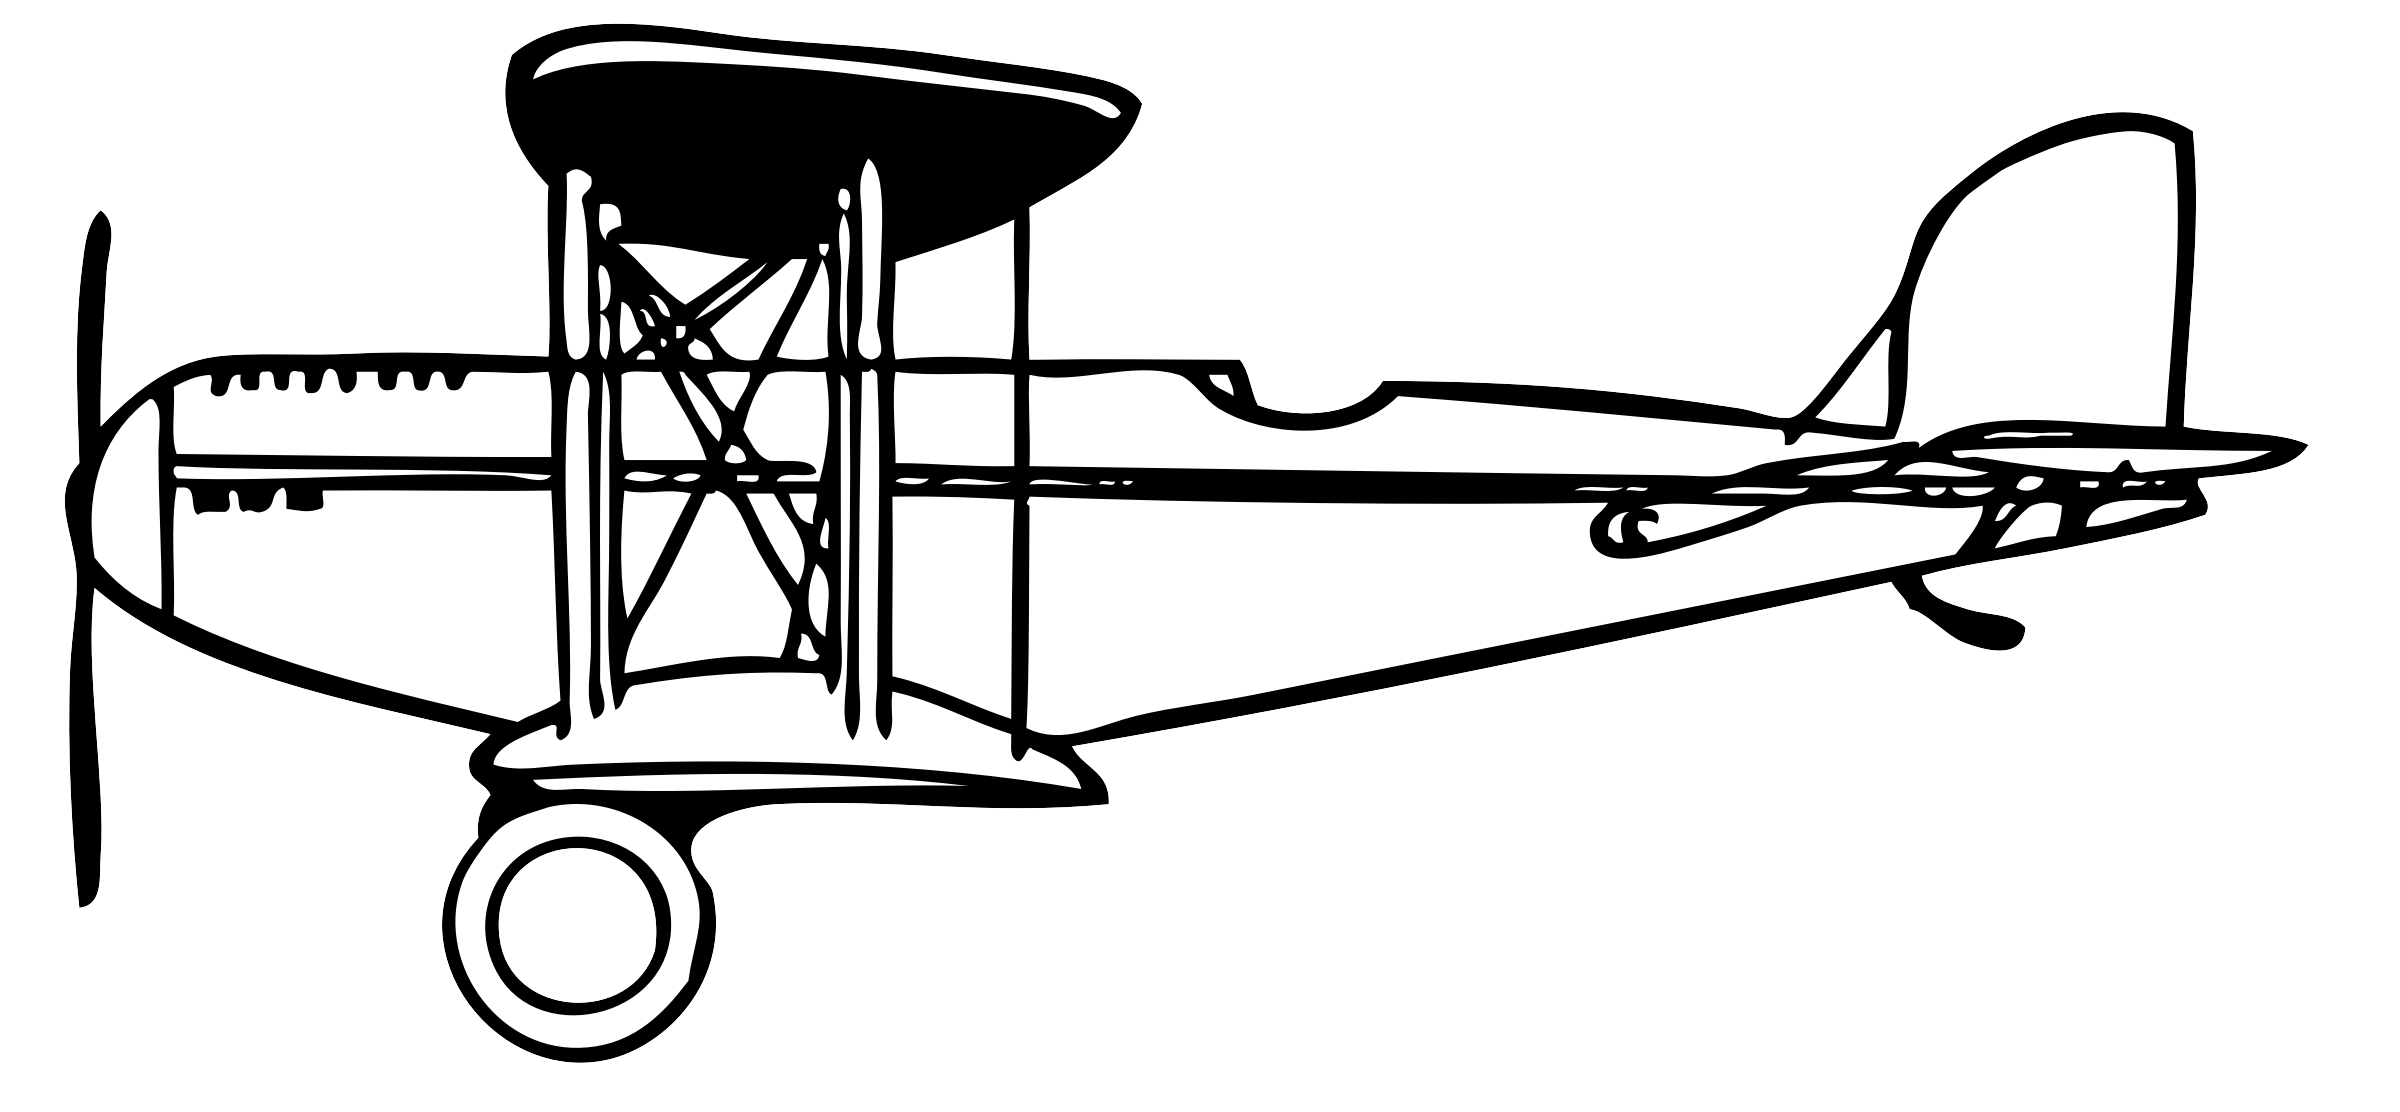 Clipart - biplane